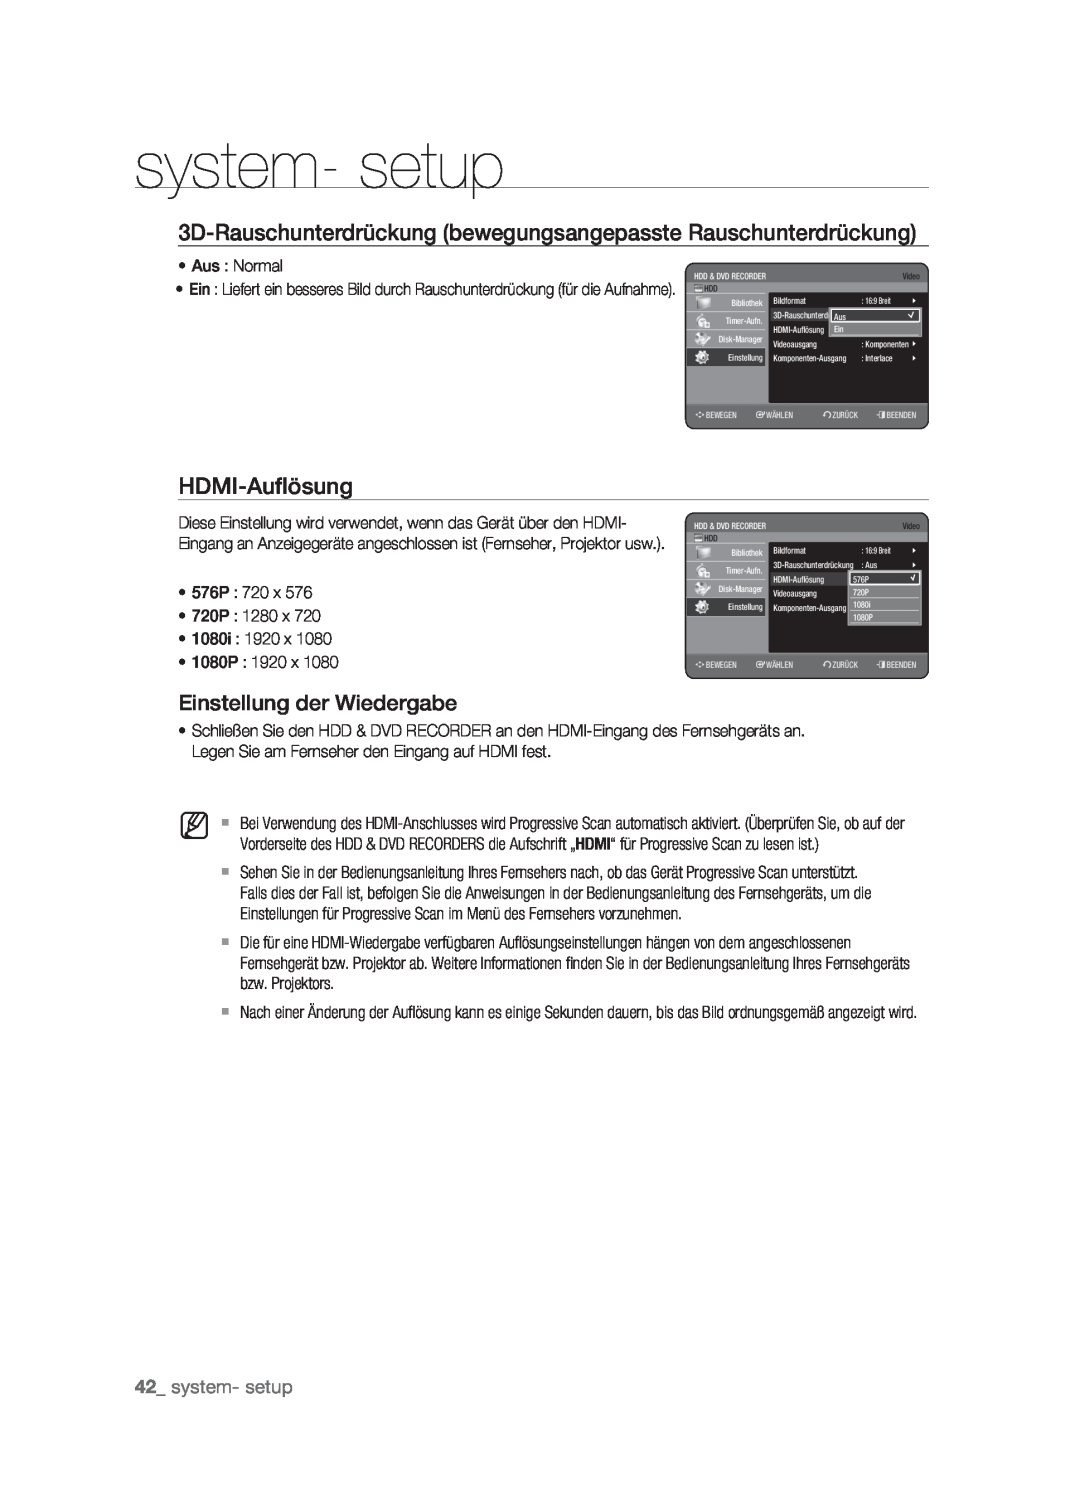 Samsung DVD-HR773/XEG manual 3D-Rauschunterdrückung bewegungsangepasste Rauschunterdrückung, HDMI-Auﬂösung, system- setup 